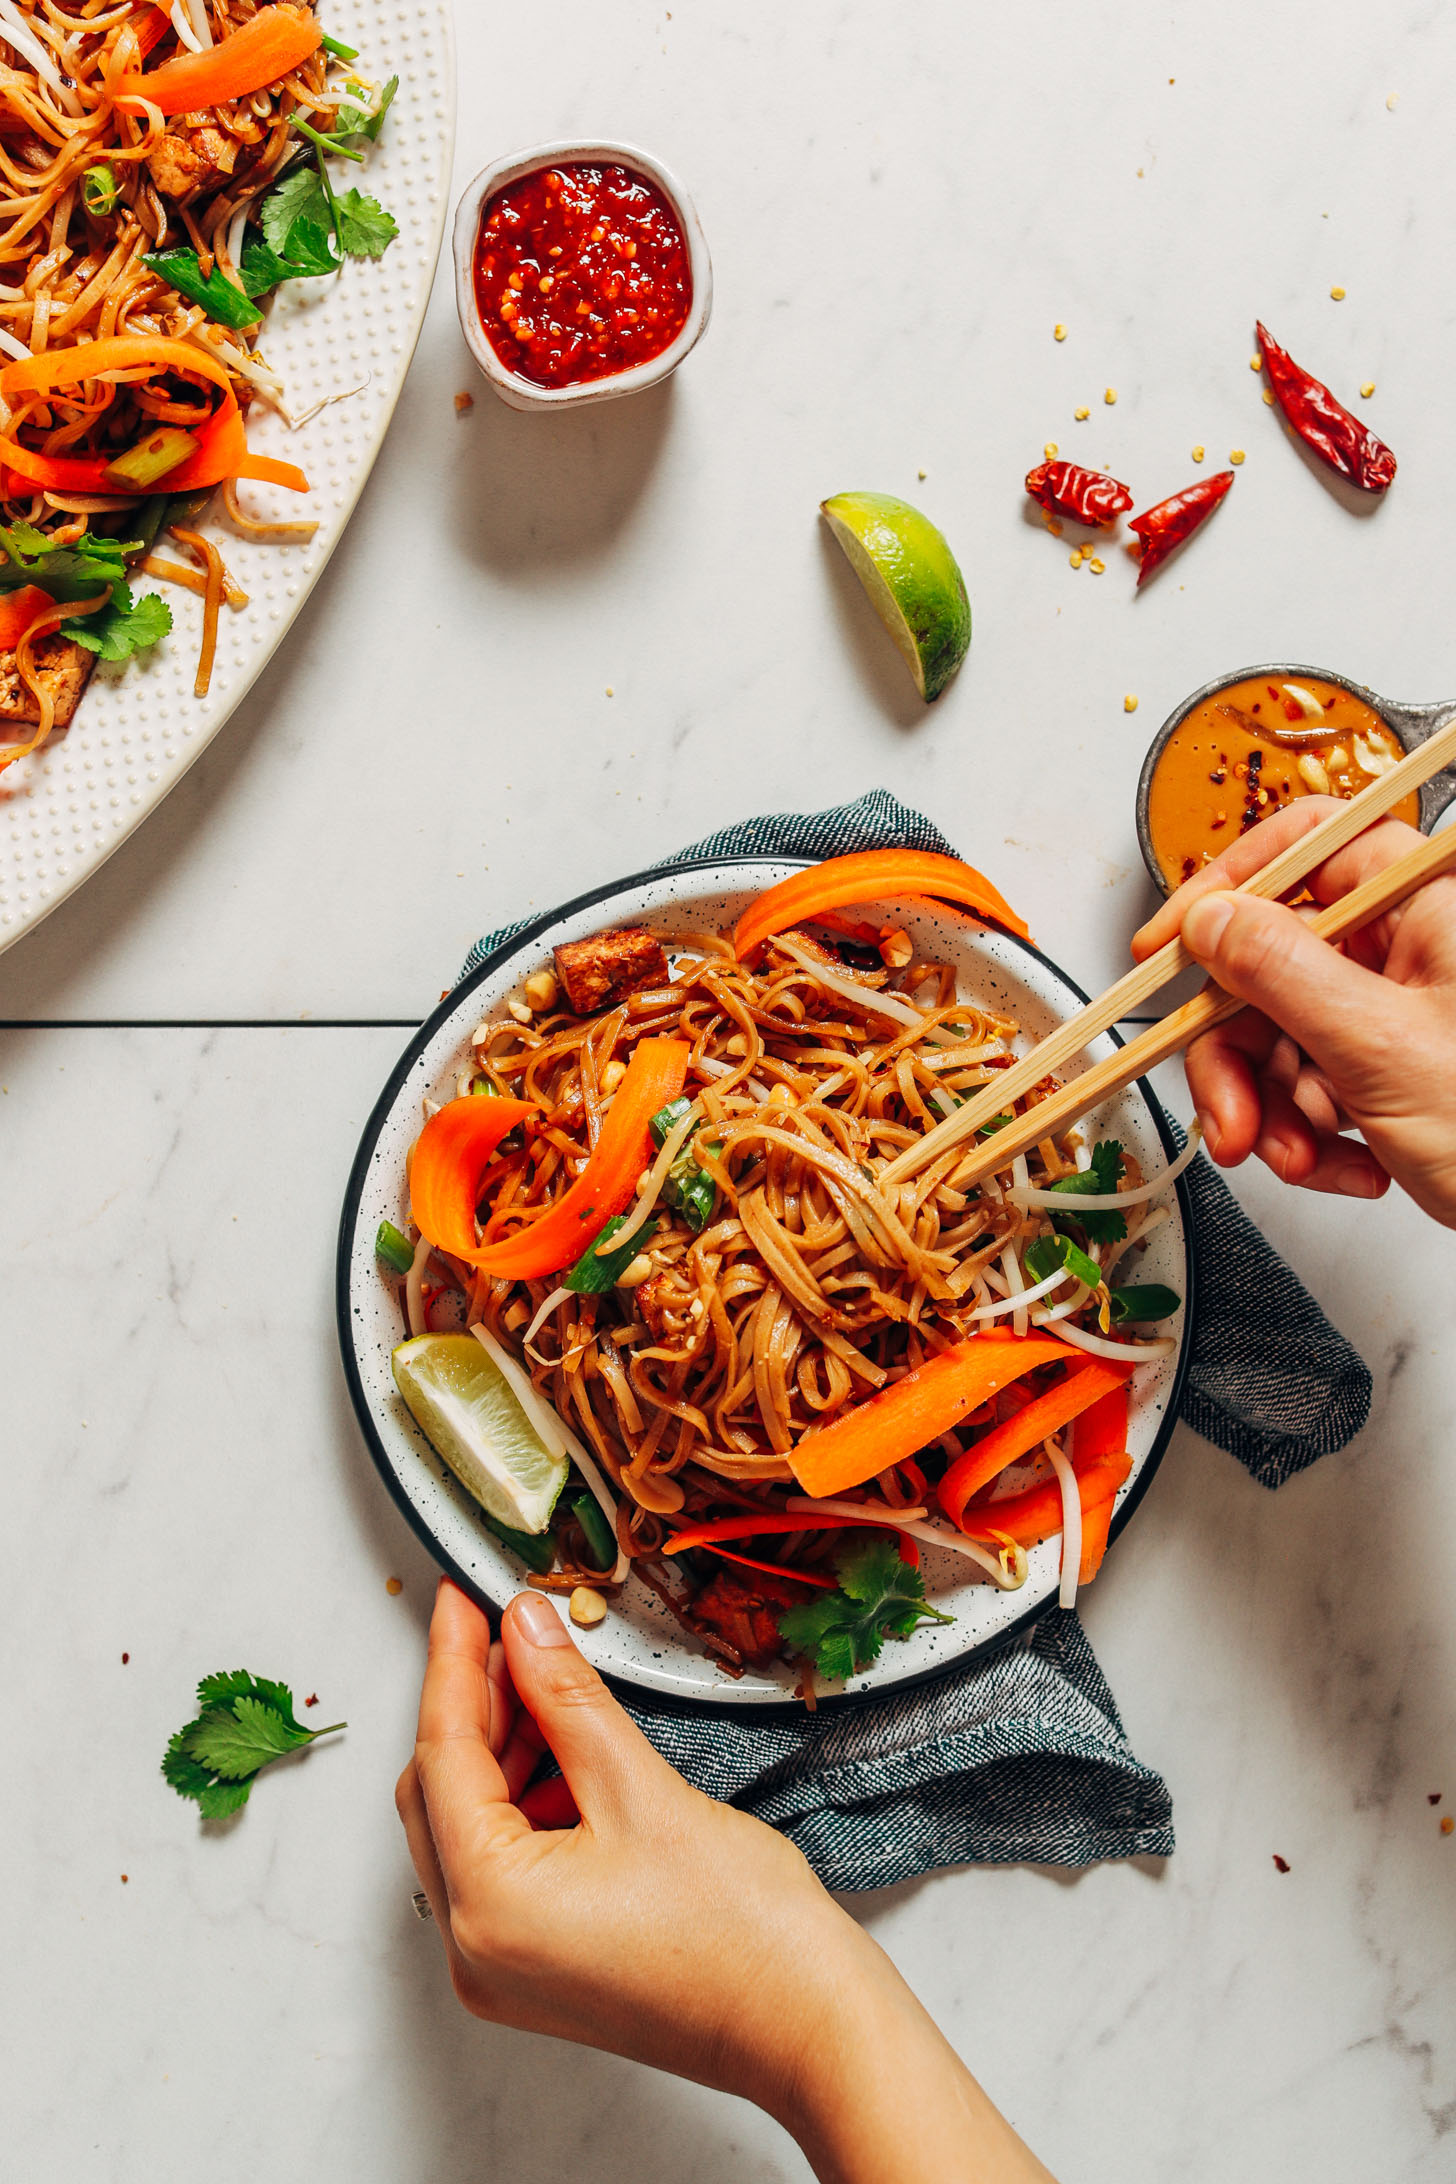 Using chopsticks to pick up a bite of Easy Vegan Pad Thai